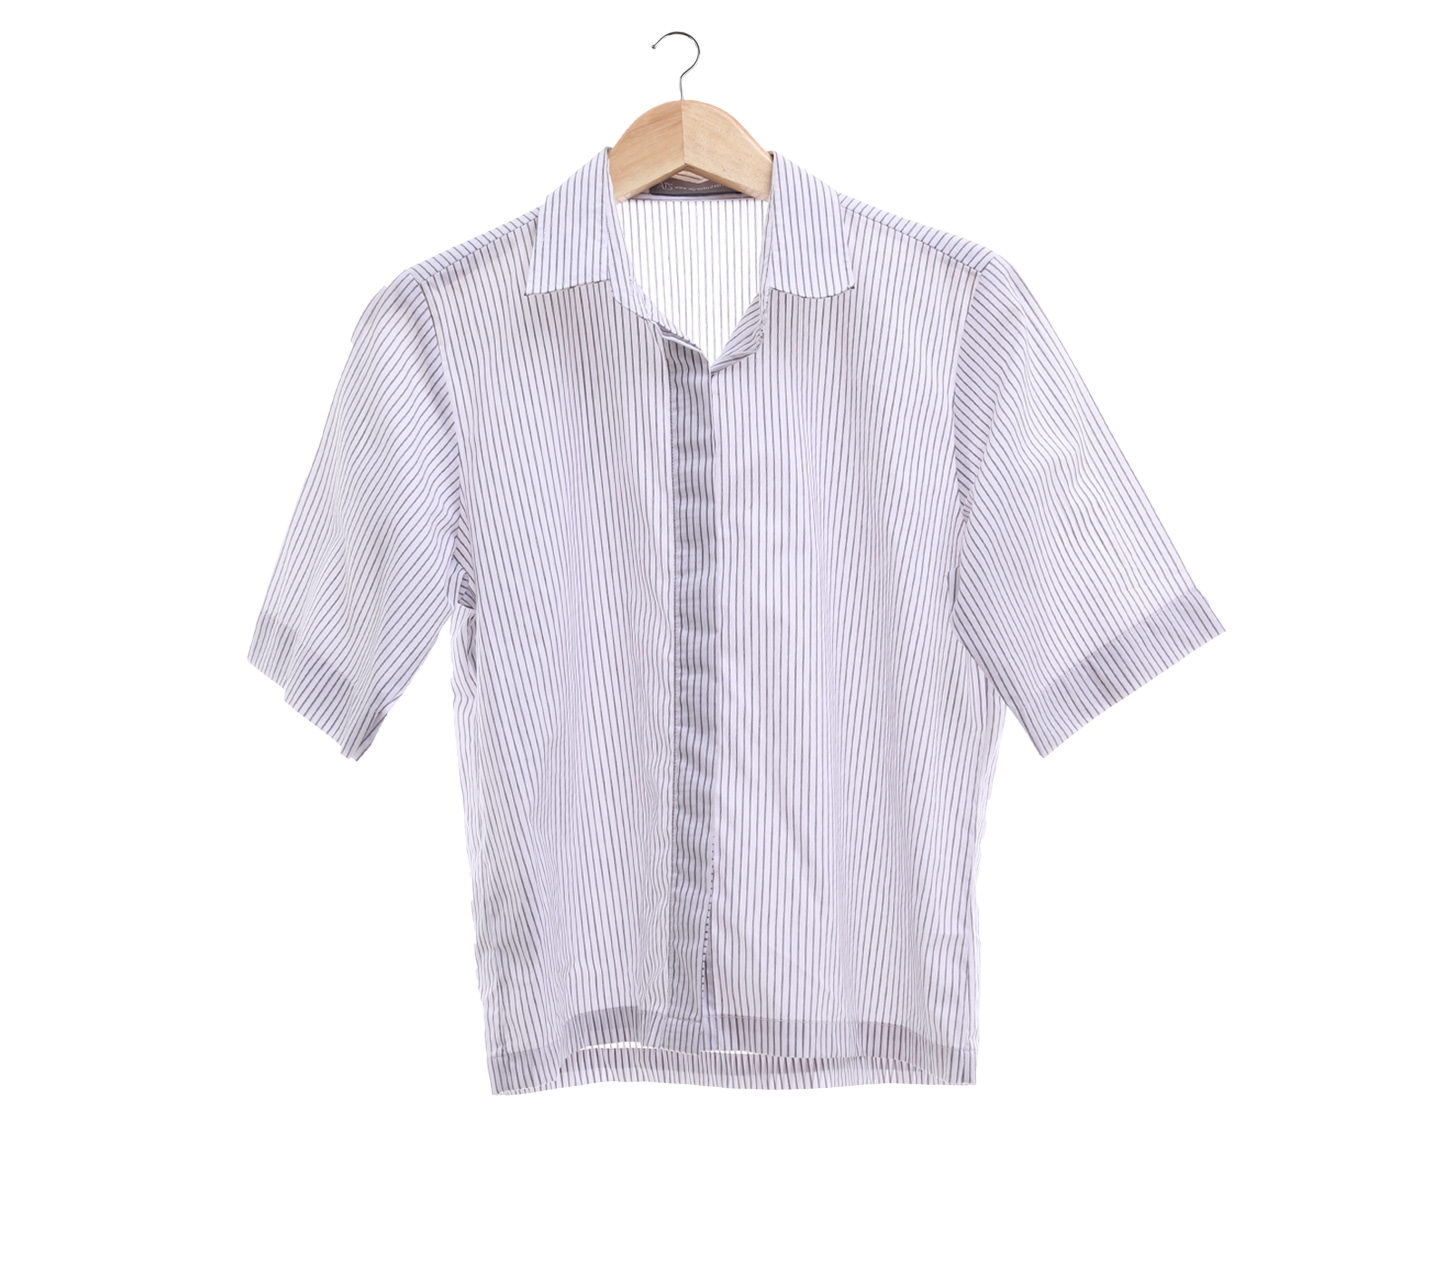 Agreetoshop Grey & White Striped Shirt